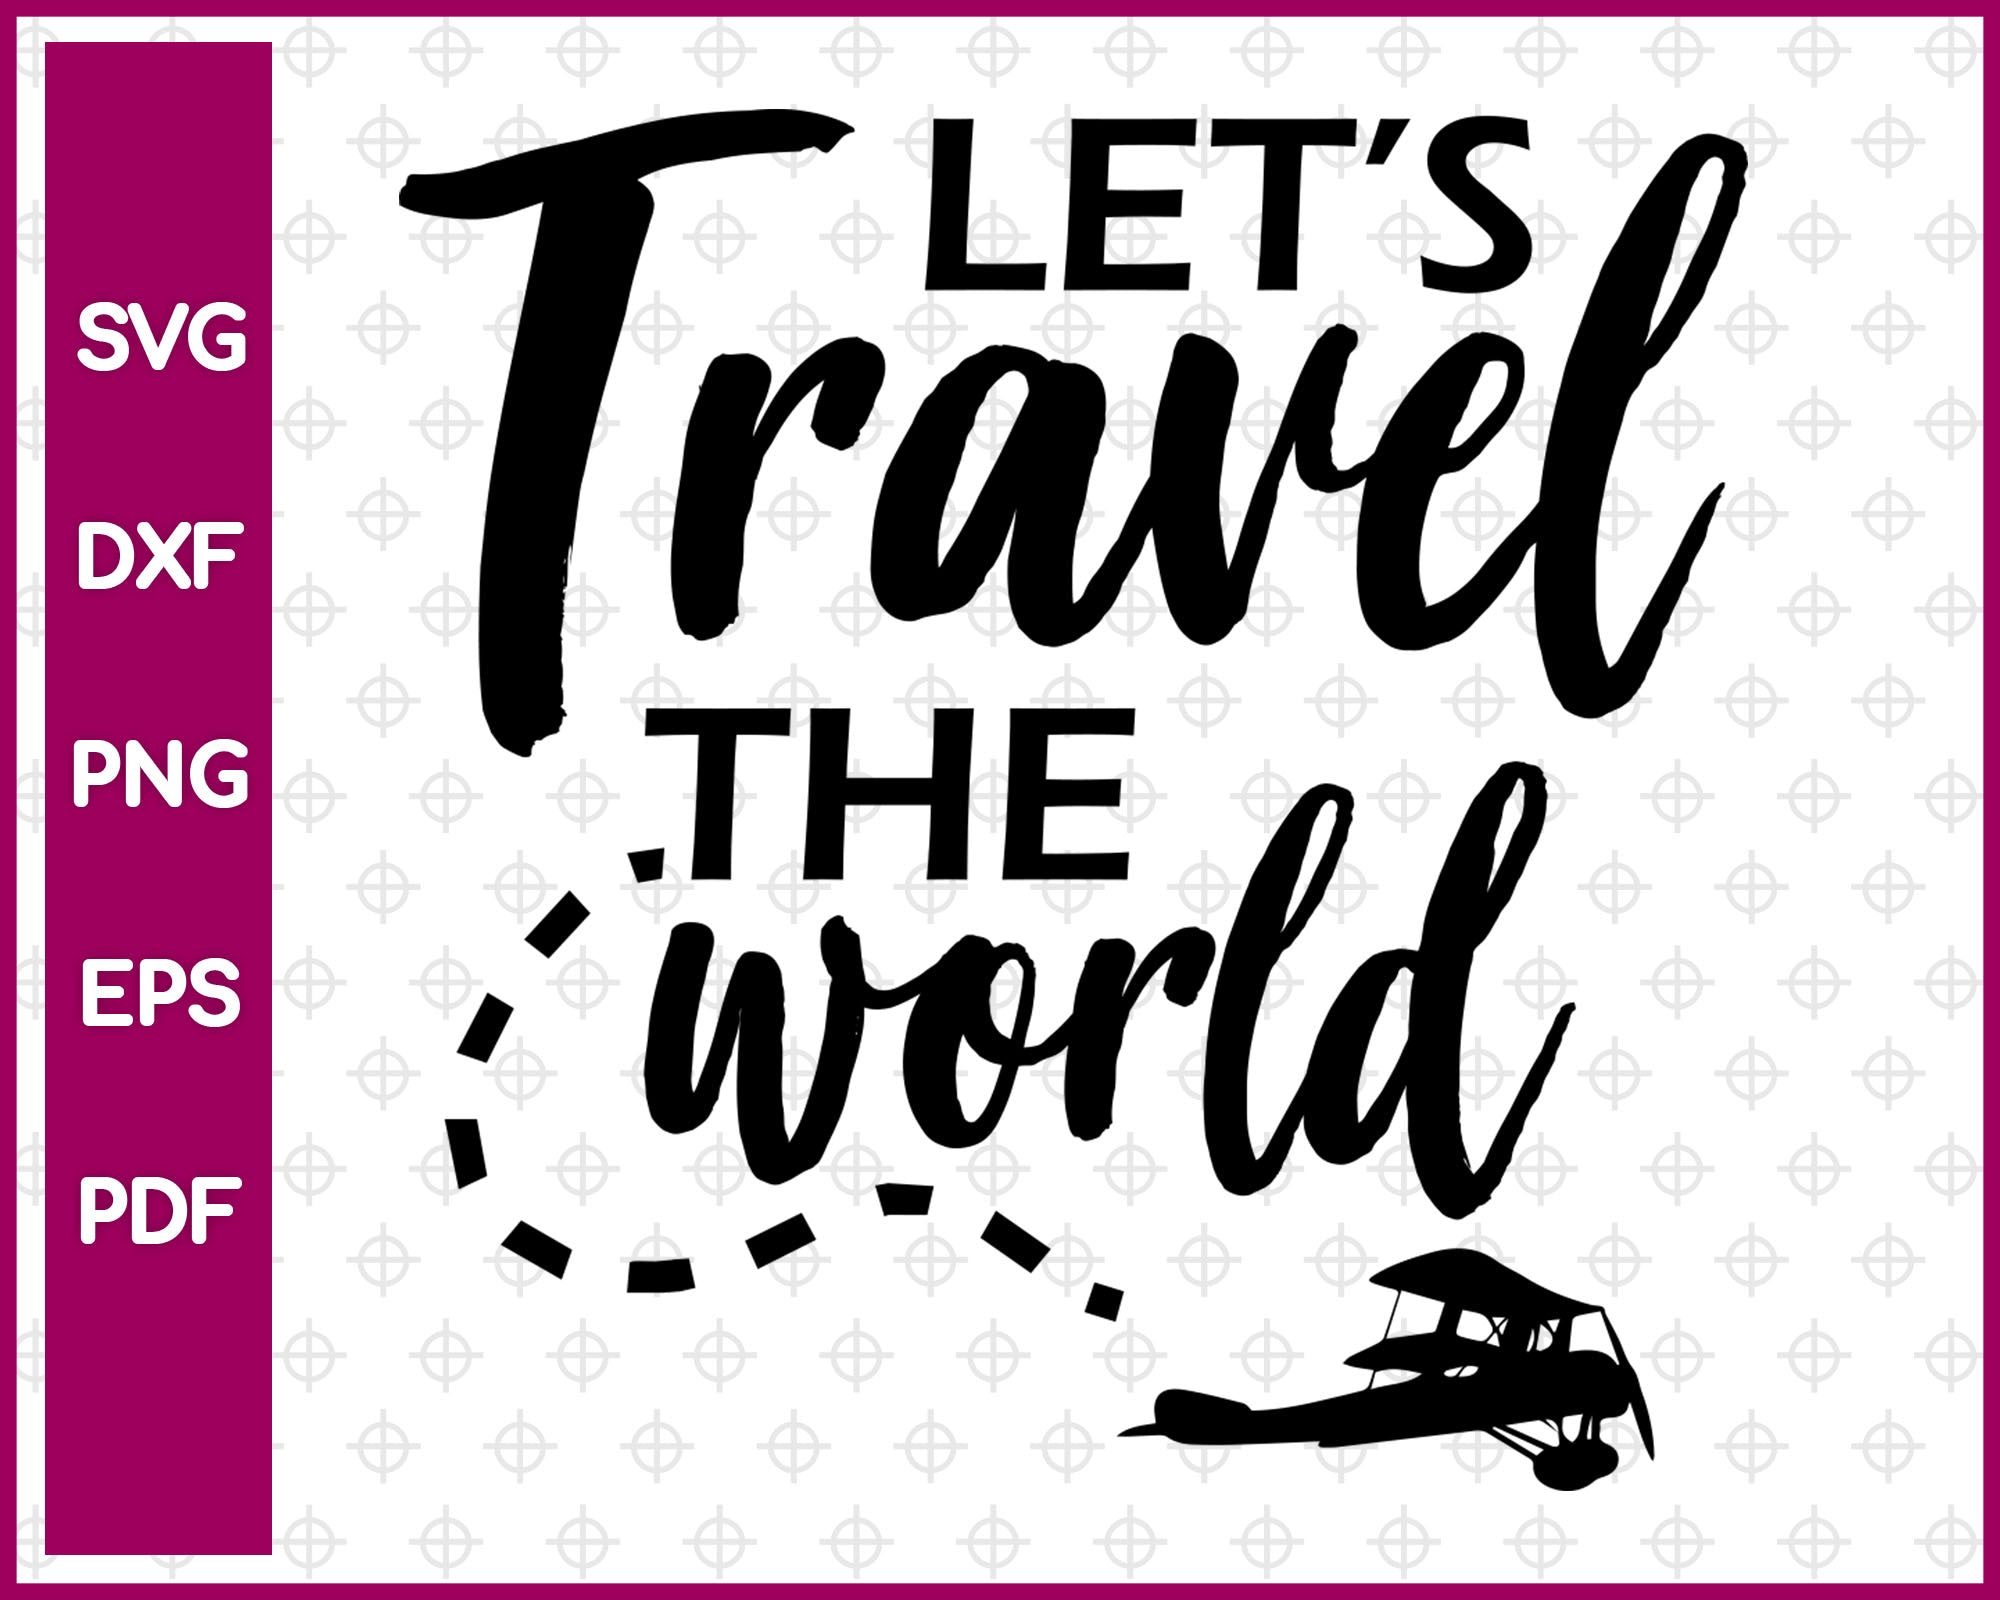 Let's Travel The World Svg, Travel Svg, Travel Svg Dxf Png Eps Pdf Printable Files